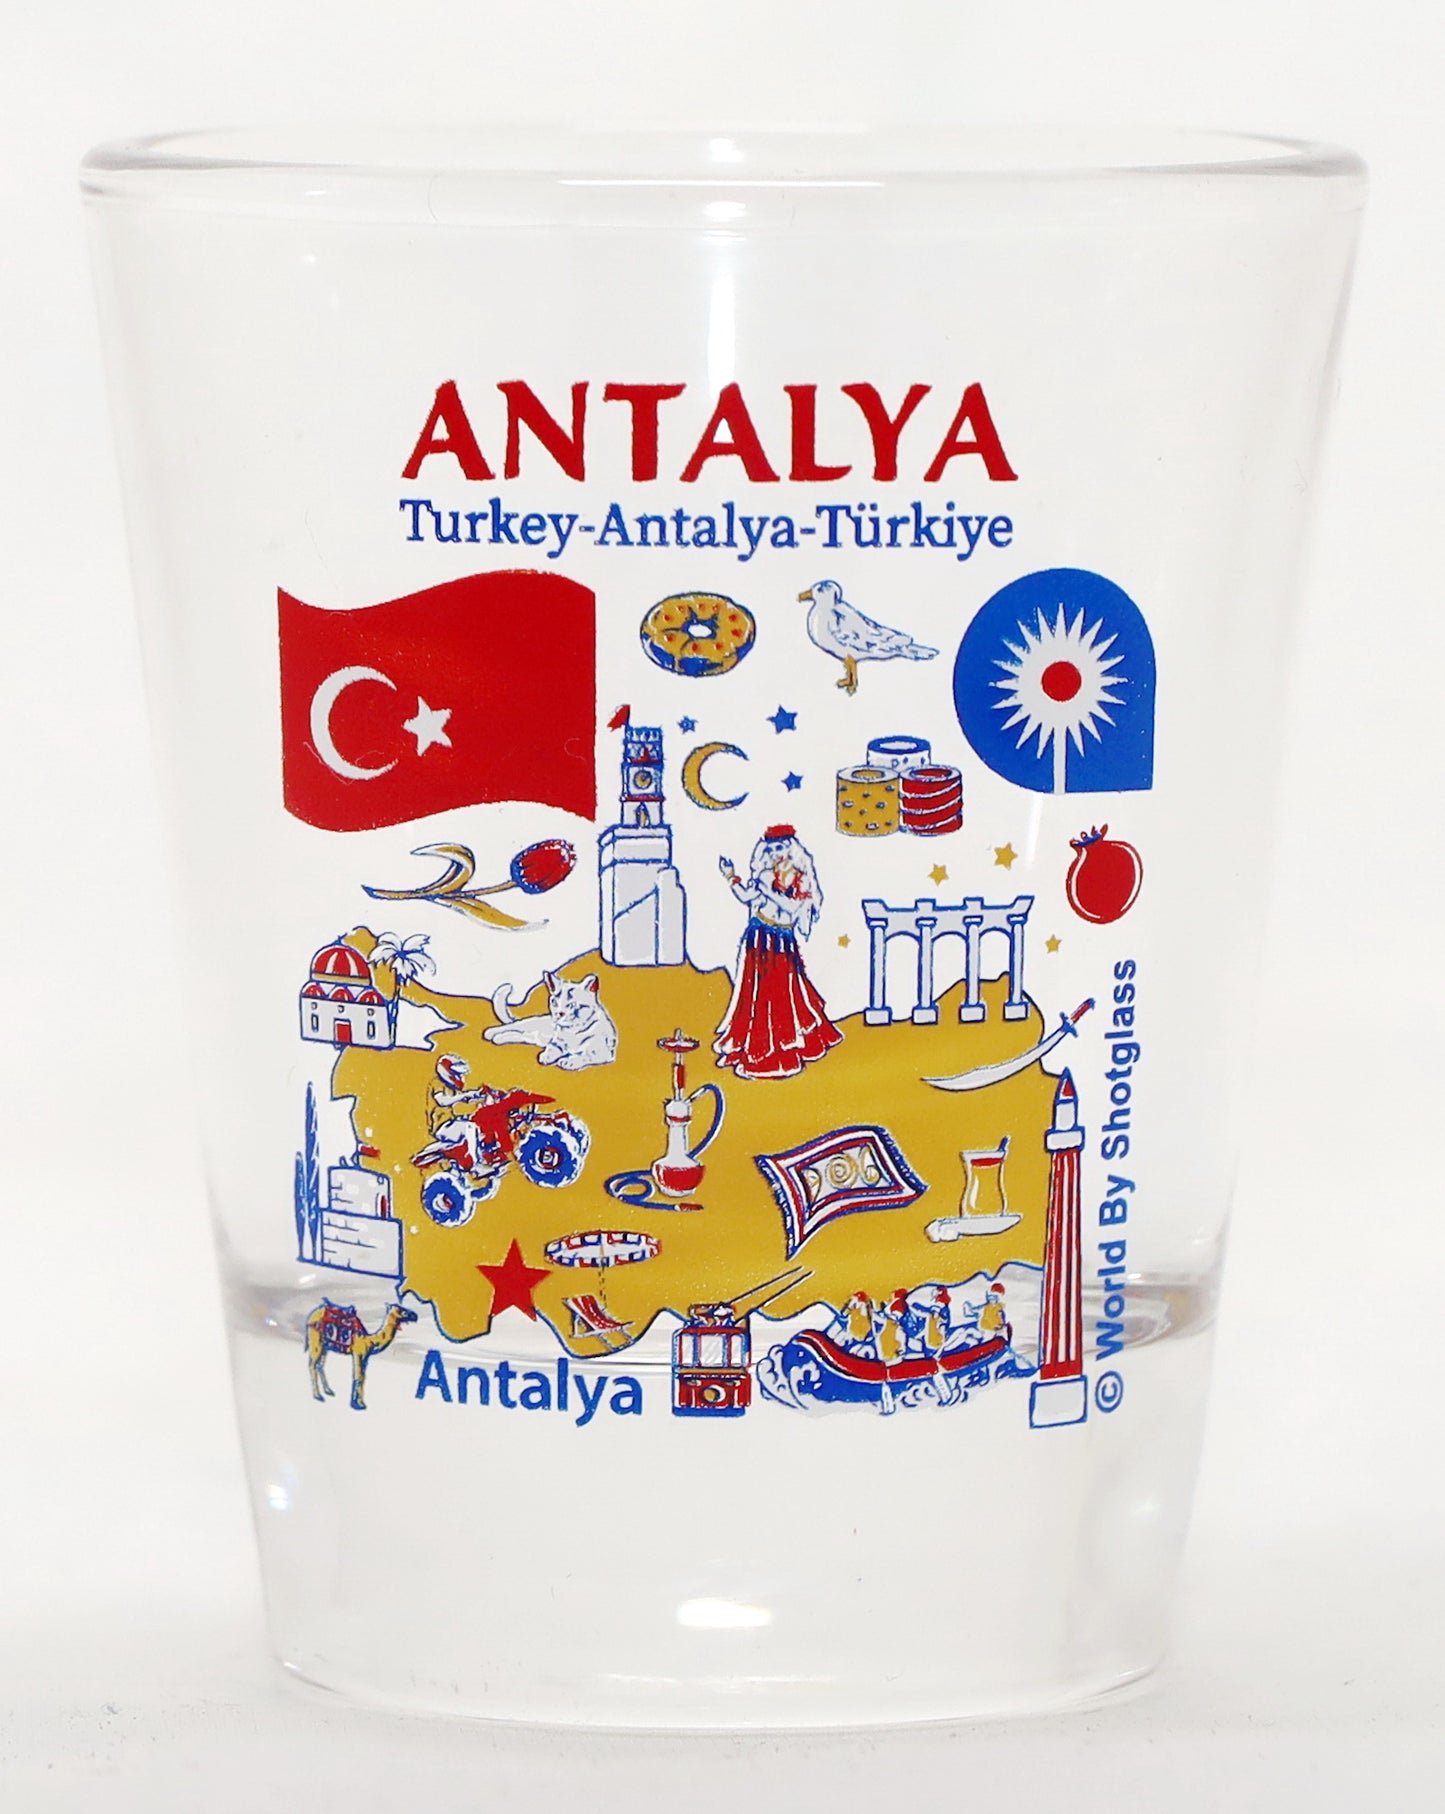 Antalya Turkey Landmarks and Icons Collage Shot Glass